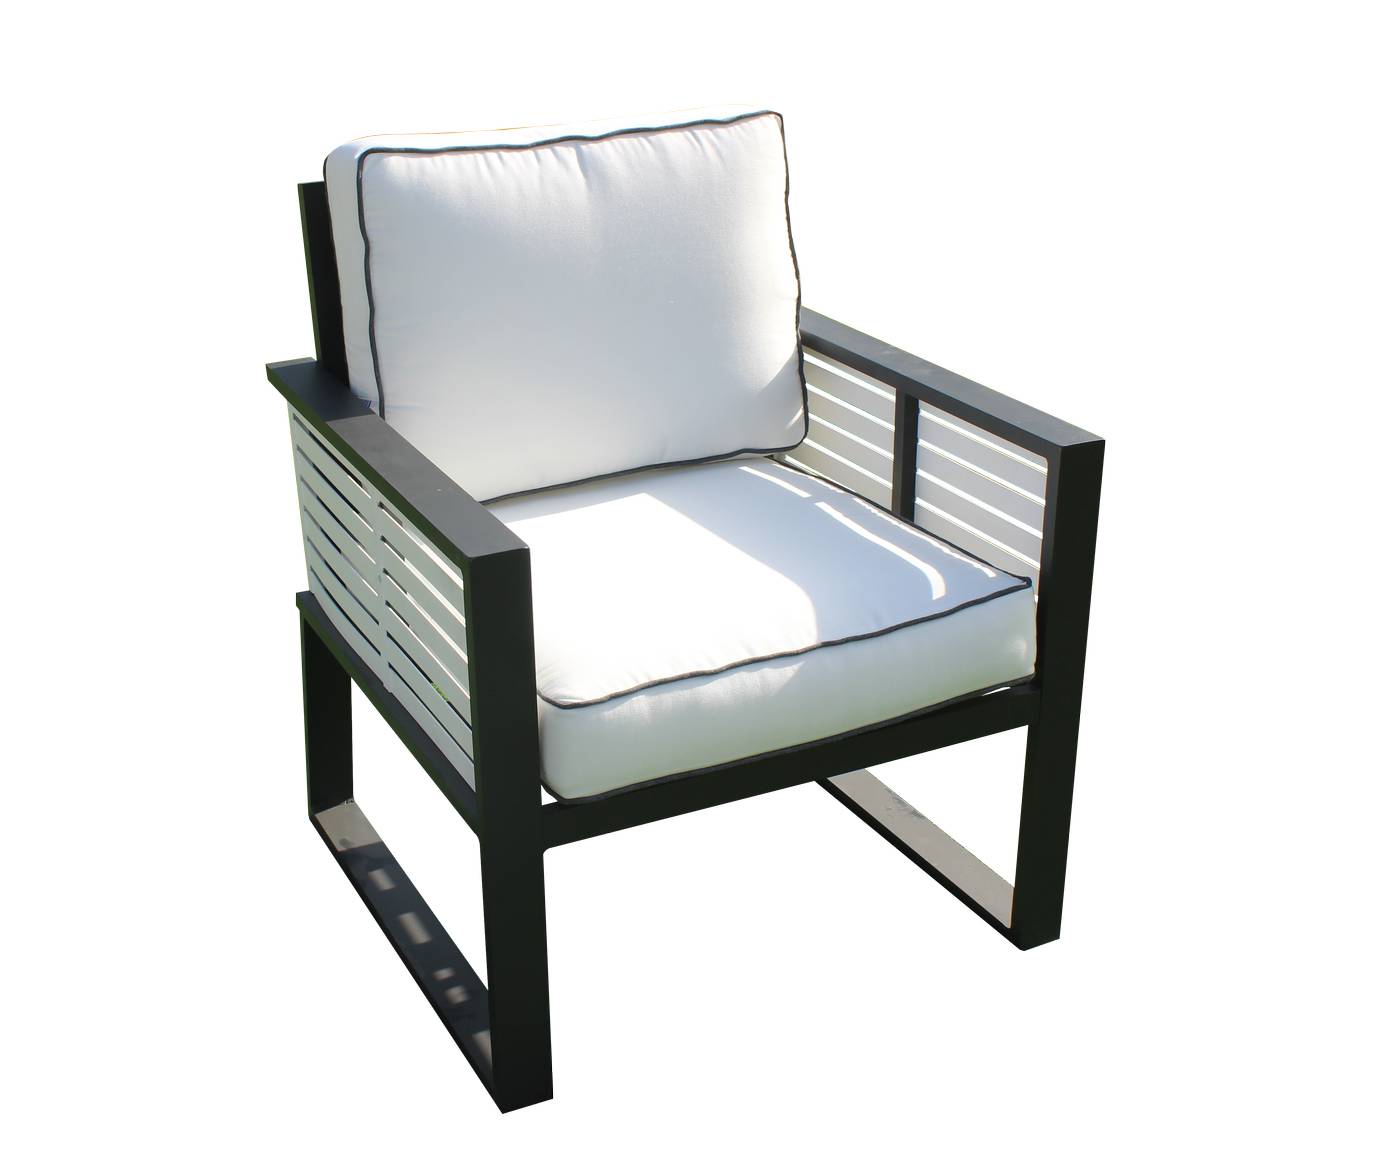 Set Aluminio Luxe Gala-7 - Exclusivo conjunto de alumnio bicolor: 1 sofá de 2 plazas + 2 sillones + 1 mesa de centro.